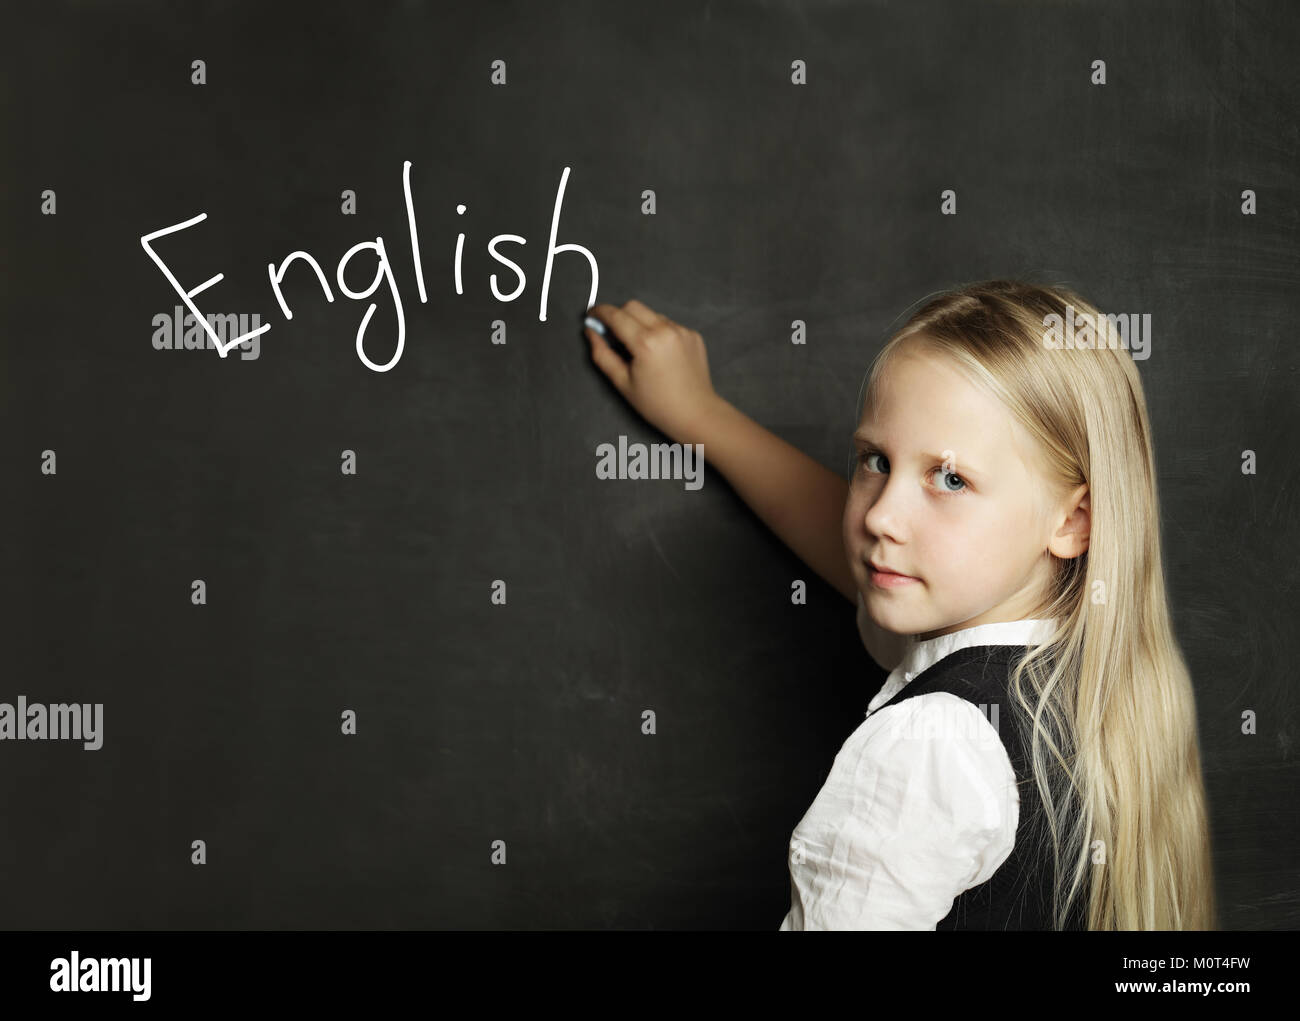 Child Girl Learning English on the School Classroom Blackboard Background  Stock Photo - Alamy